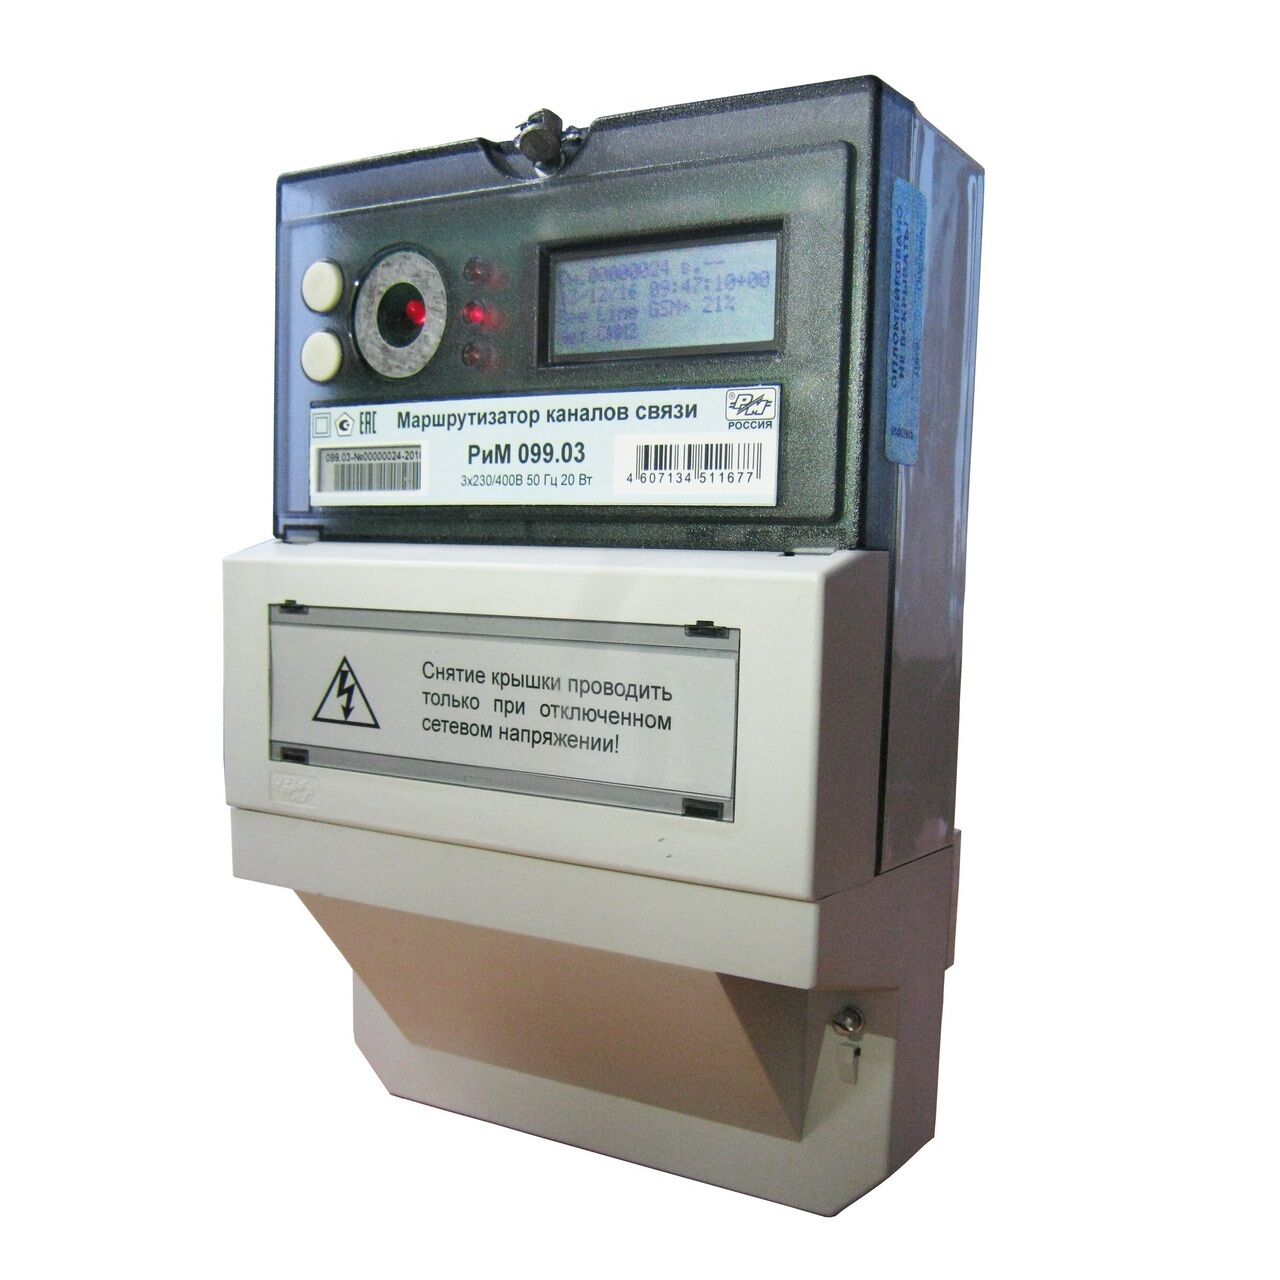 Маршрутизатор каналов связи (МКС) РиМ 099.03 в комплекте с монтажным устройством для РиМ 000.01